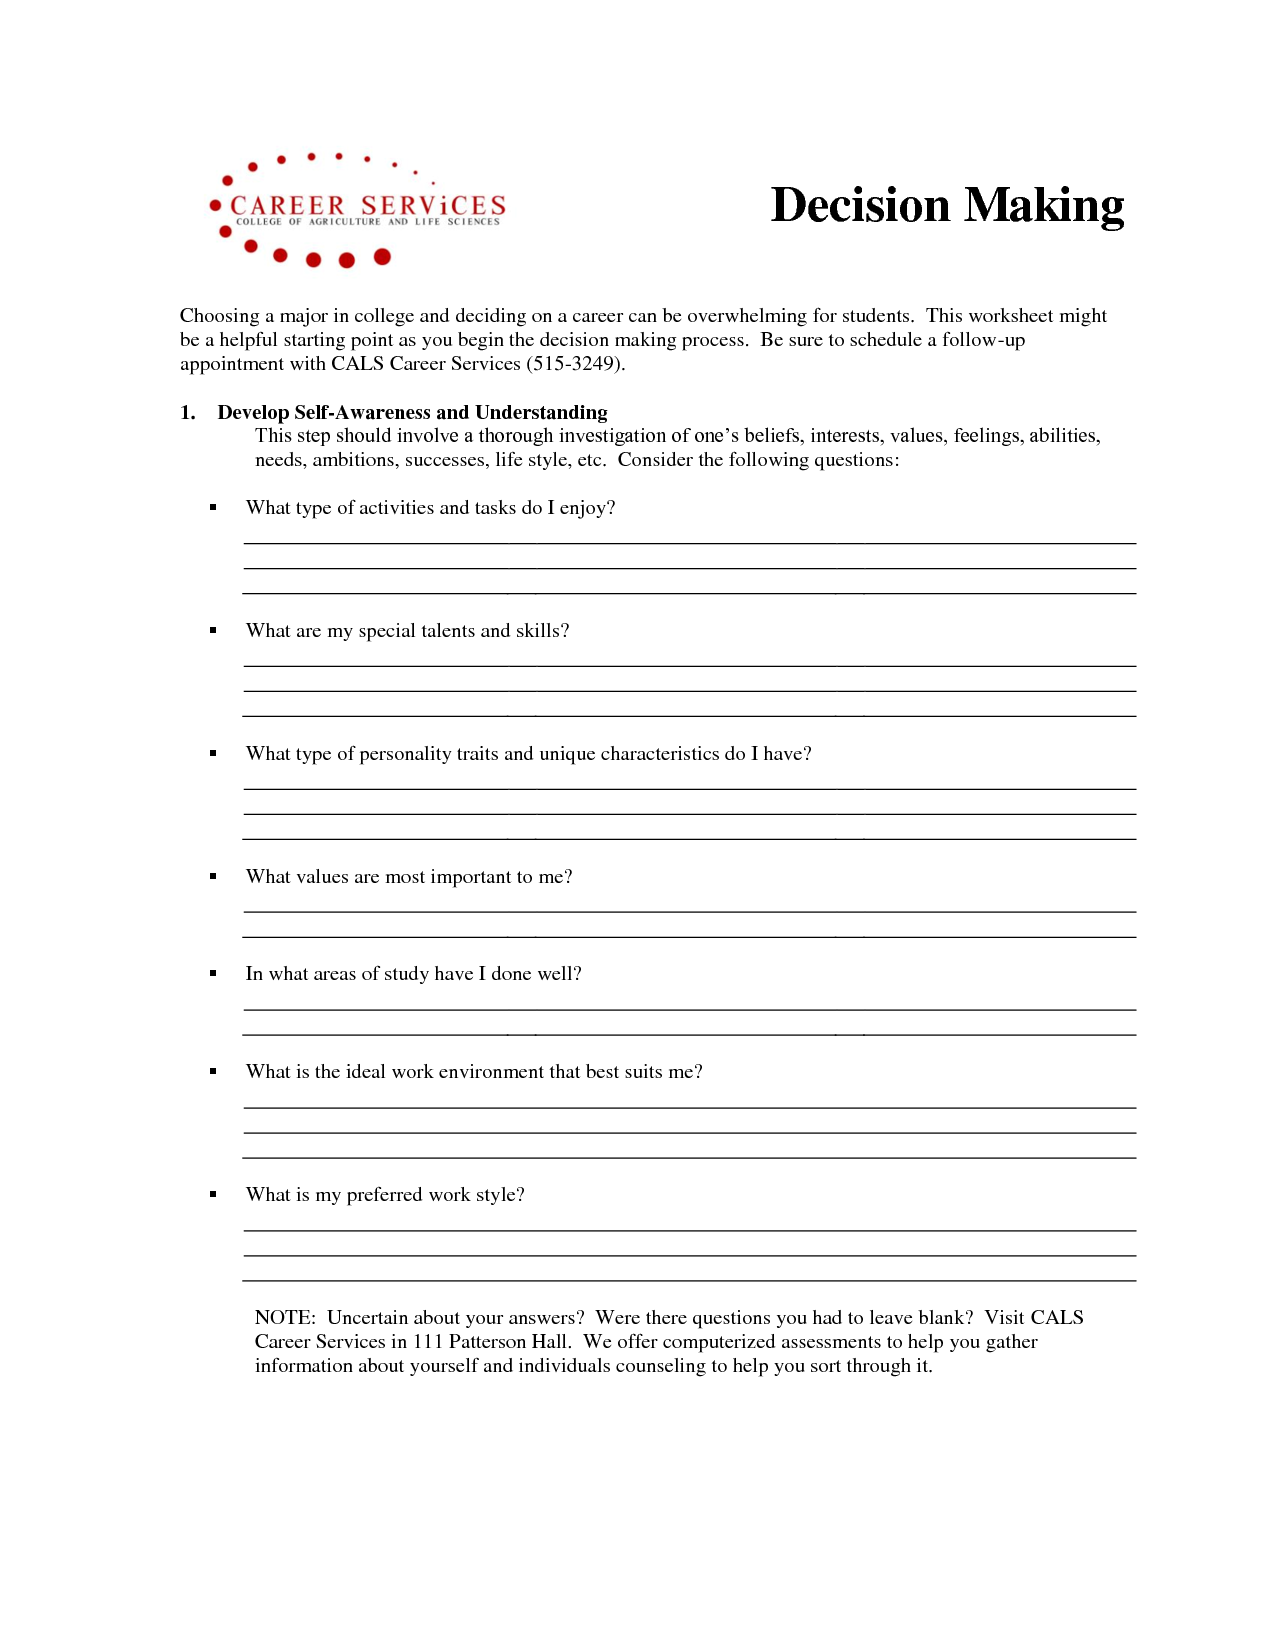 Making Good Choices Worksheet